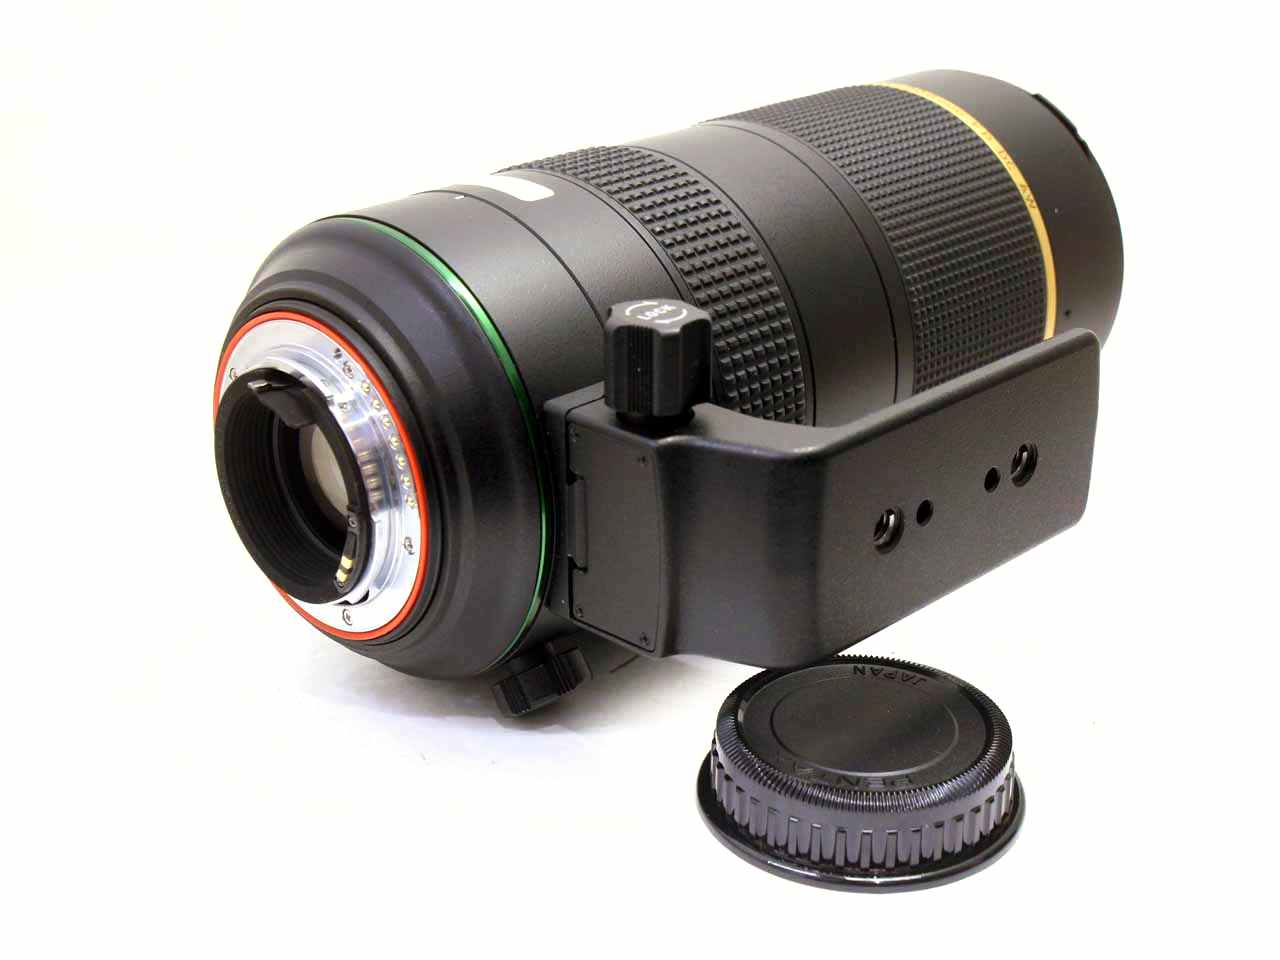 Pentax HD D-FA* 70-200mm F2.8 ED DC AW Lens